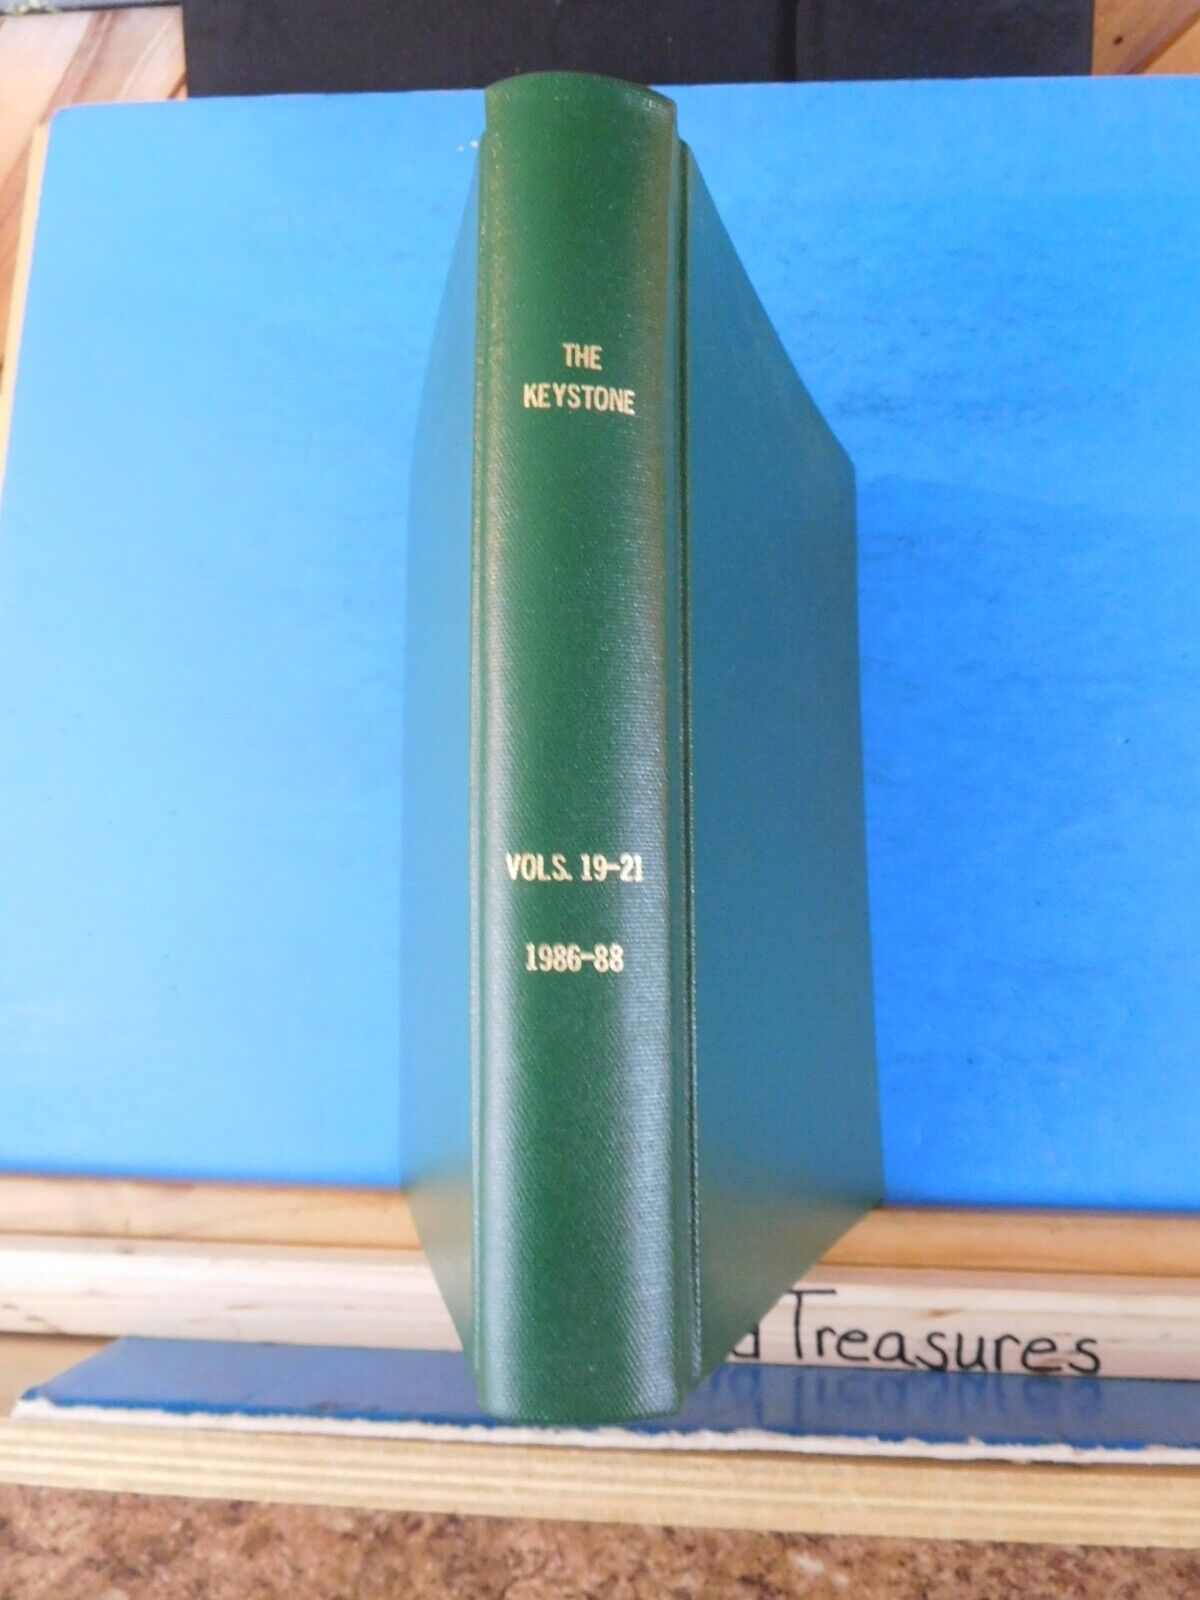 Keystone PRR T&HS Magazine Bound Volume 19-21  1986-1988  Green